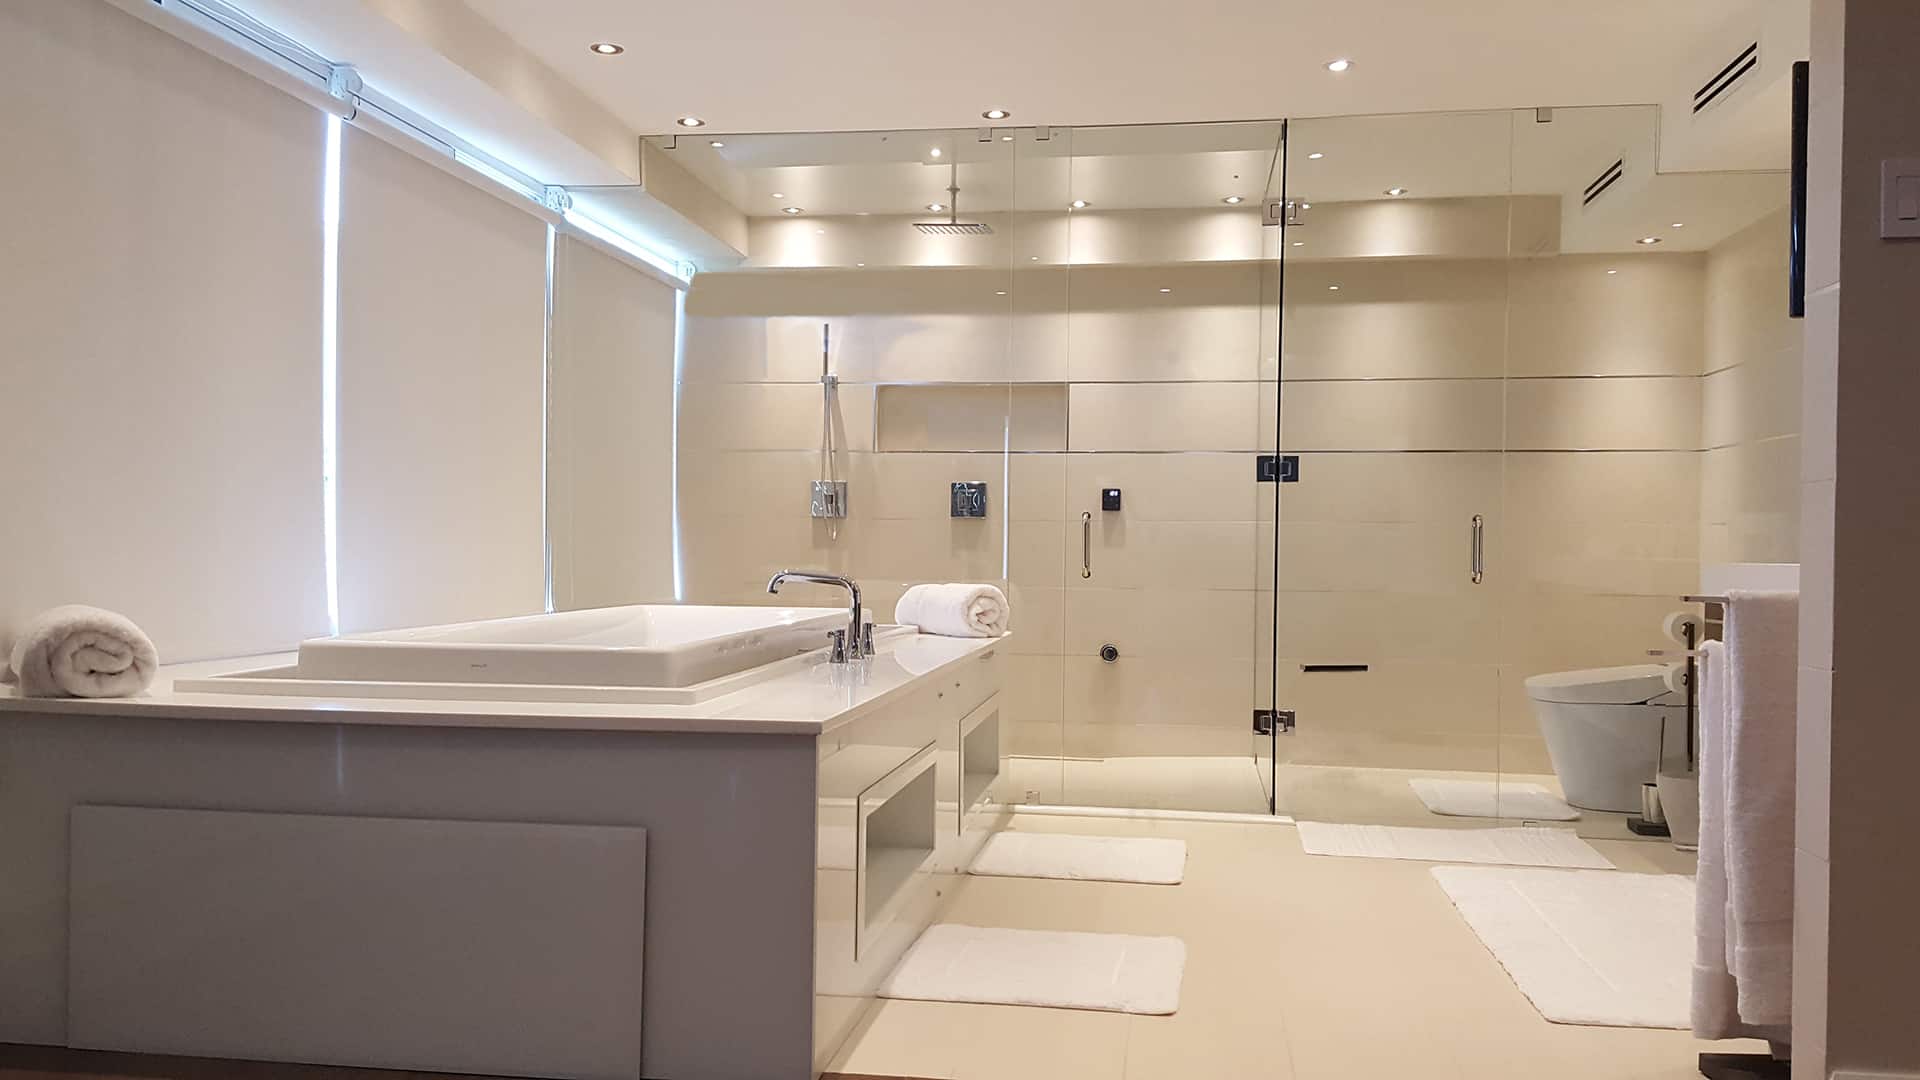 Glass shower door by Aldora, walk-in shower, soaker tub, ceramic tile, luxurious master bathroom, glass shower wall by Aldora